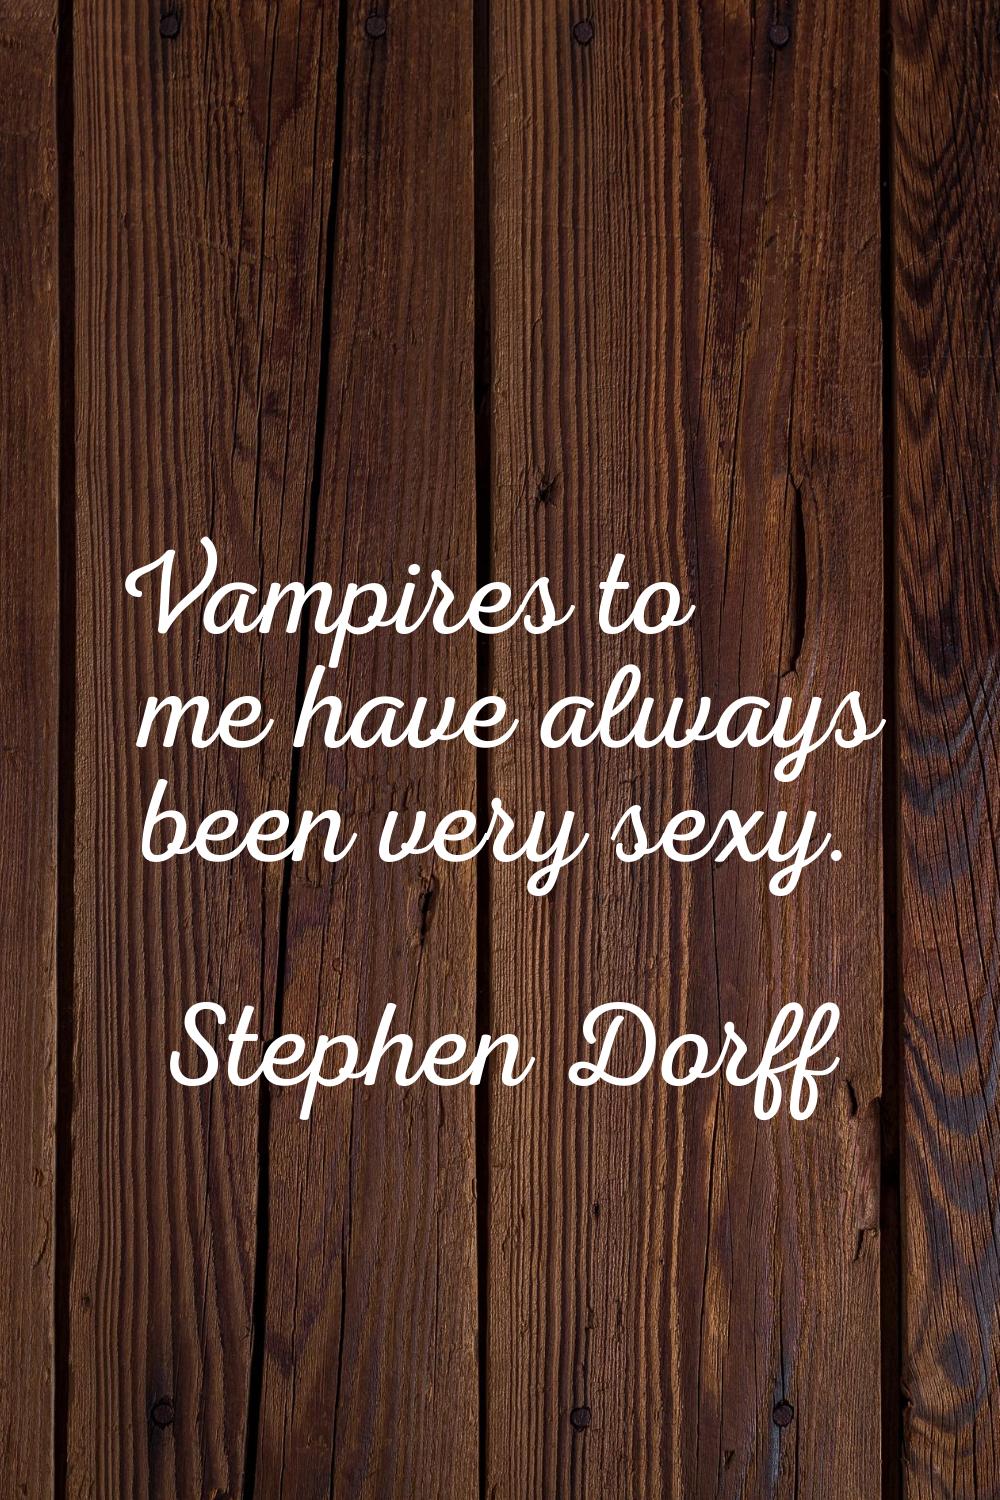 Vampires to me have always been very sexy.